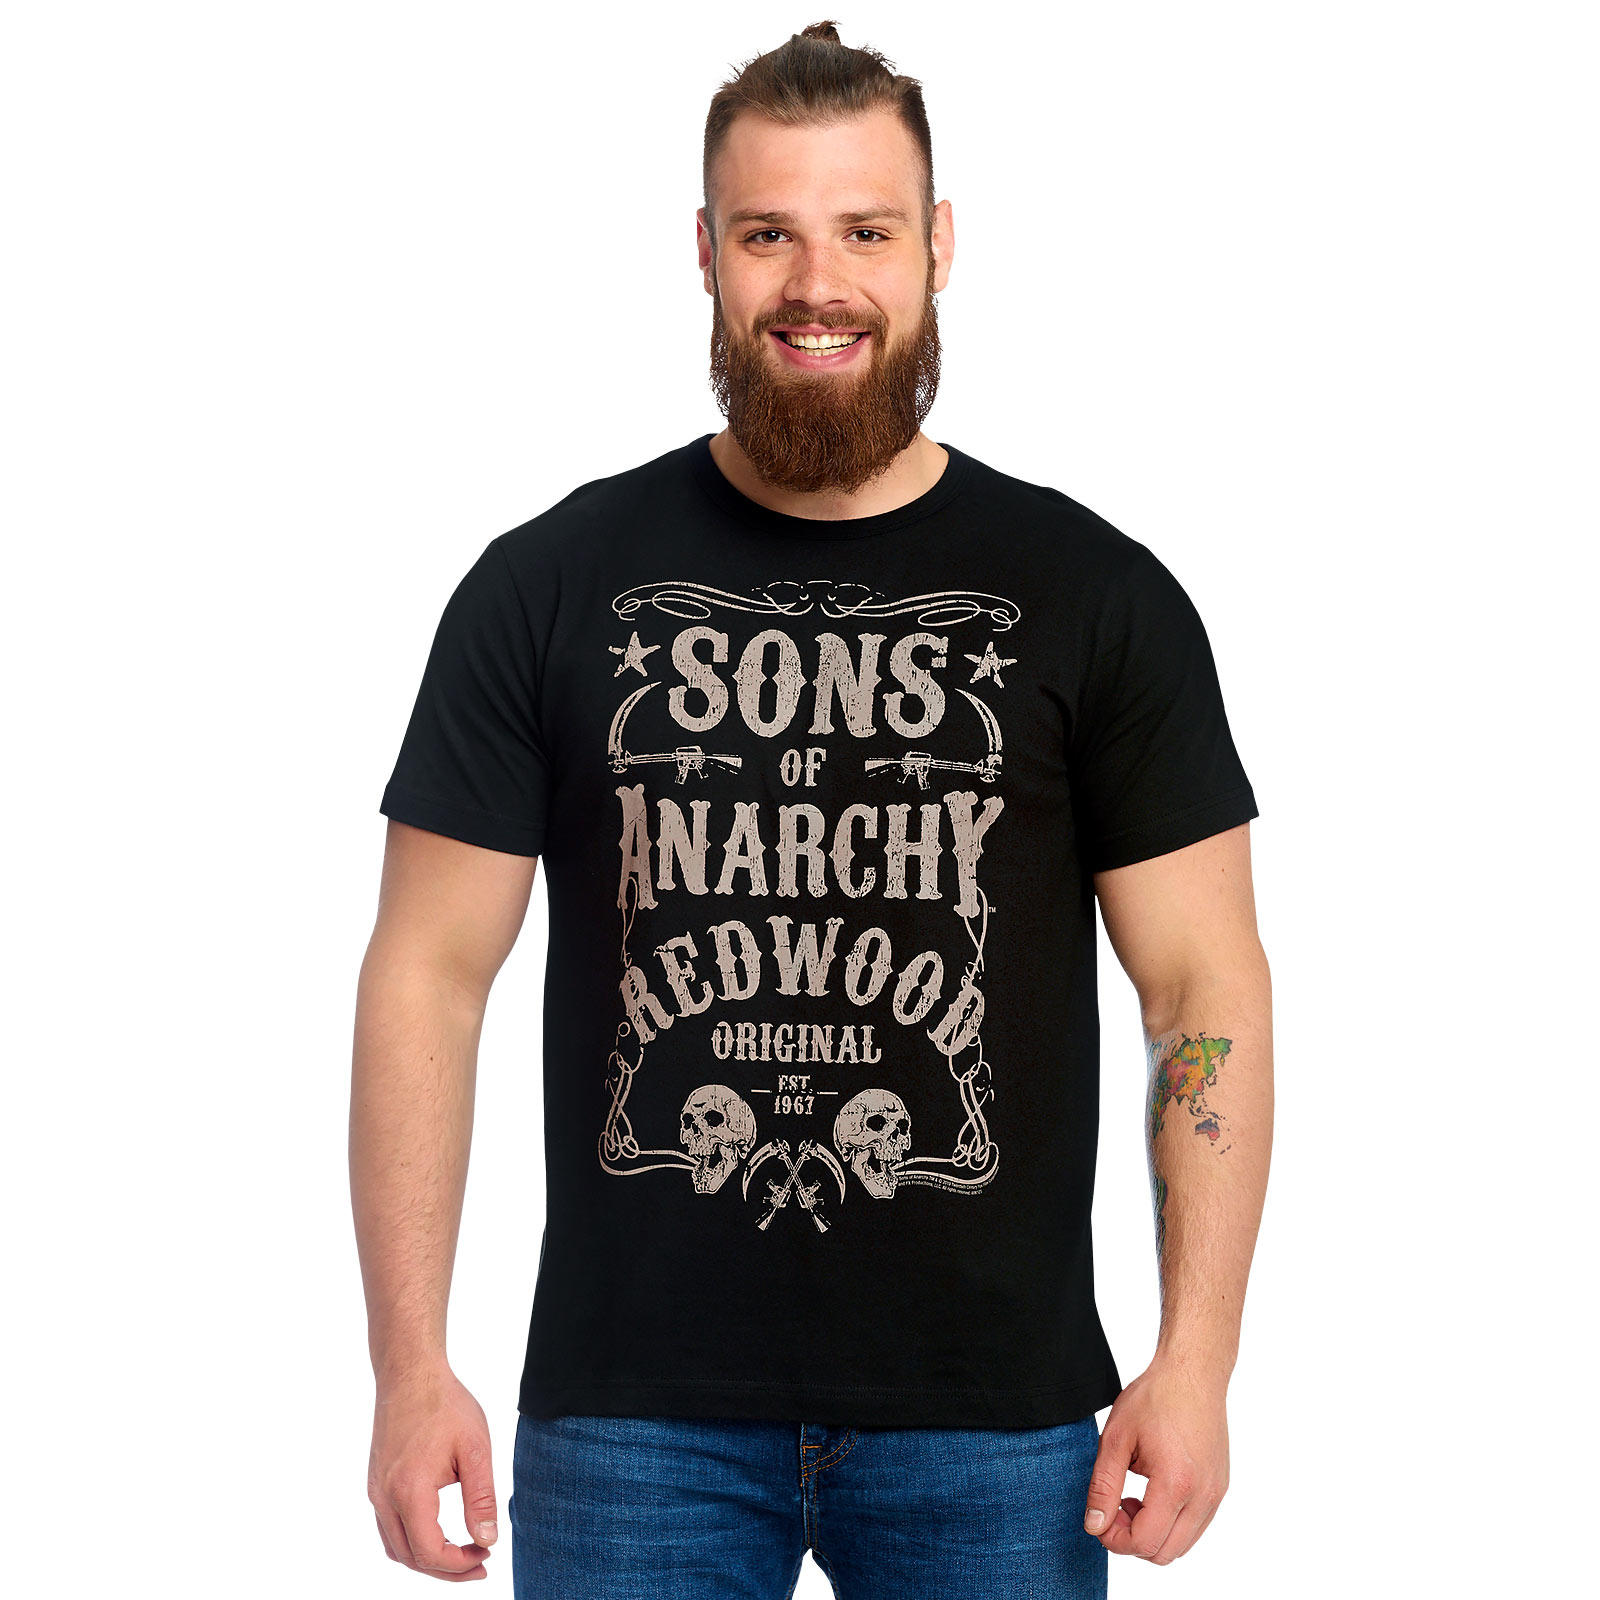 Sons of Anarchy - Redwood Original Est. 1967 T-Shirt schwarz